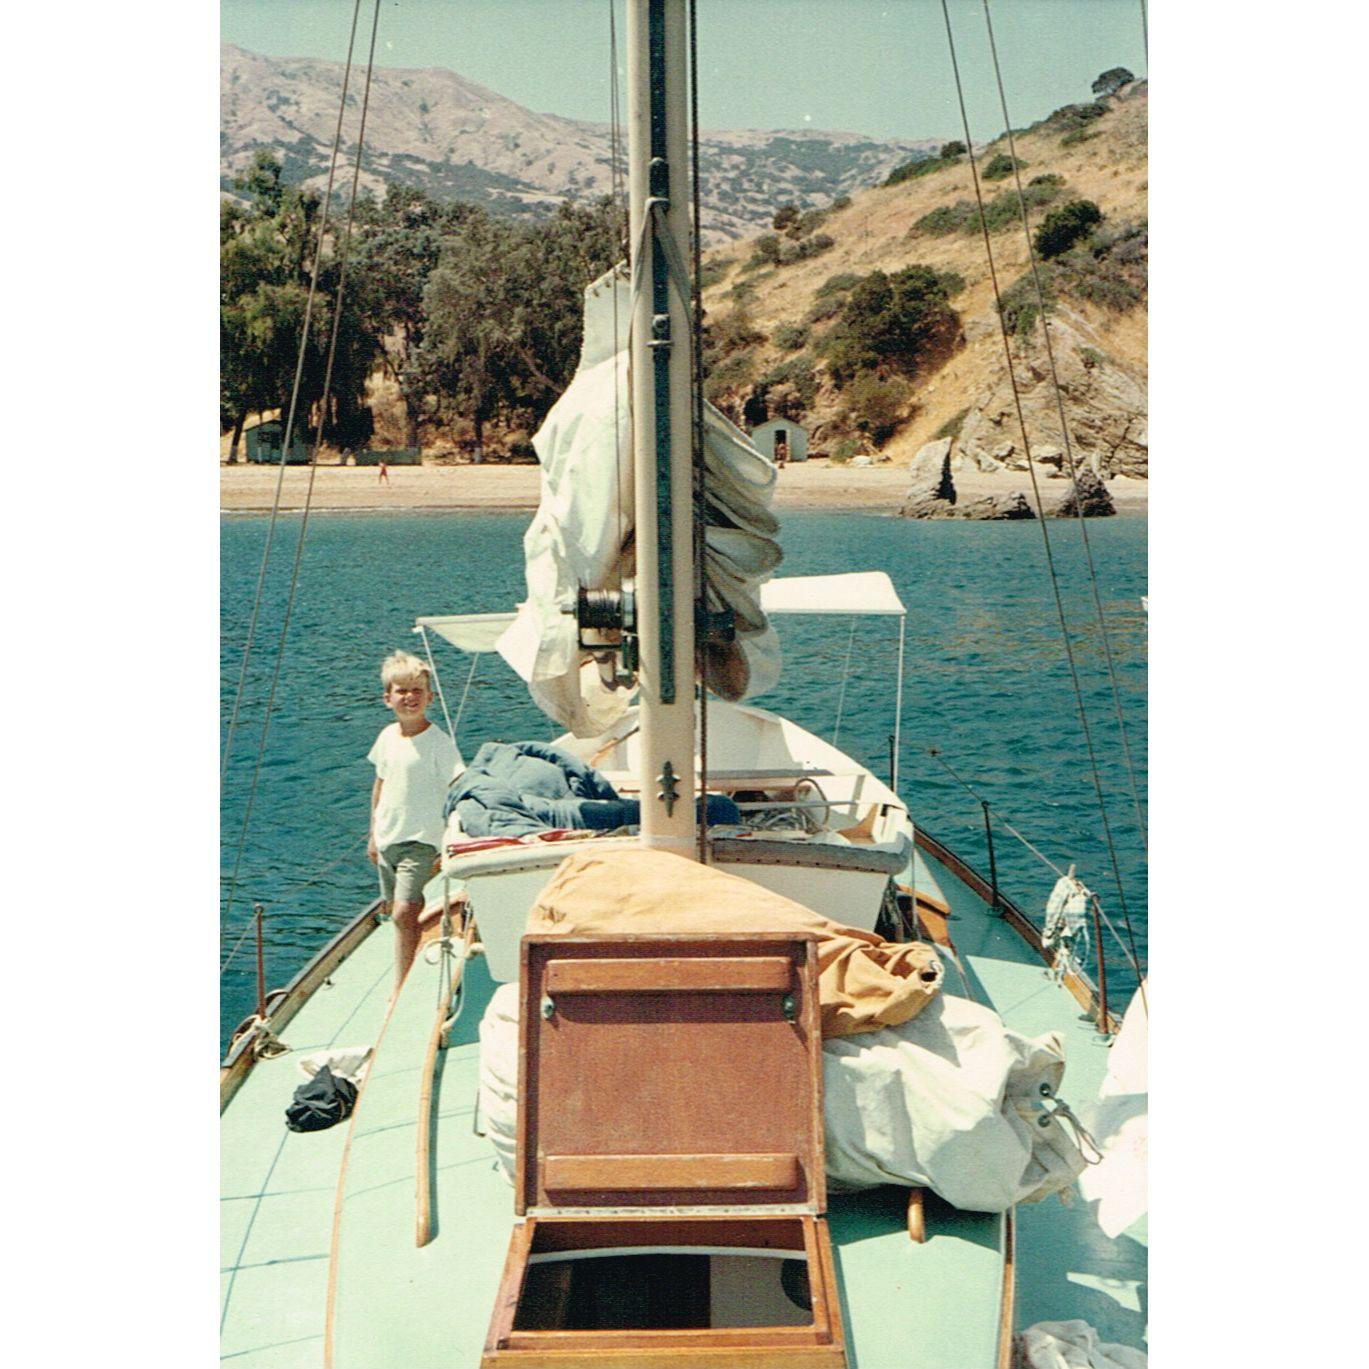 Catalina Island - Summer 1968